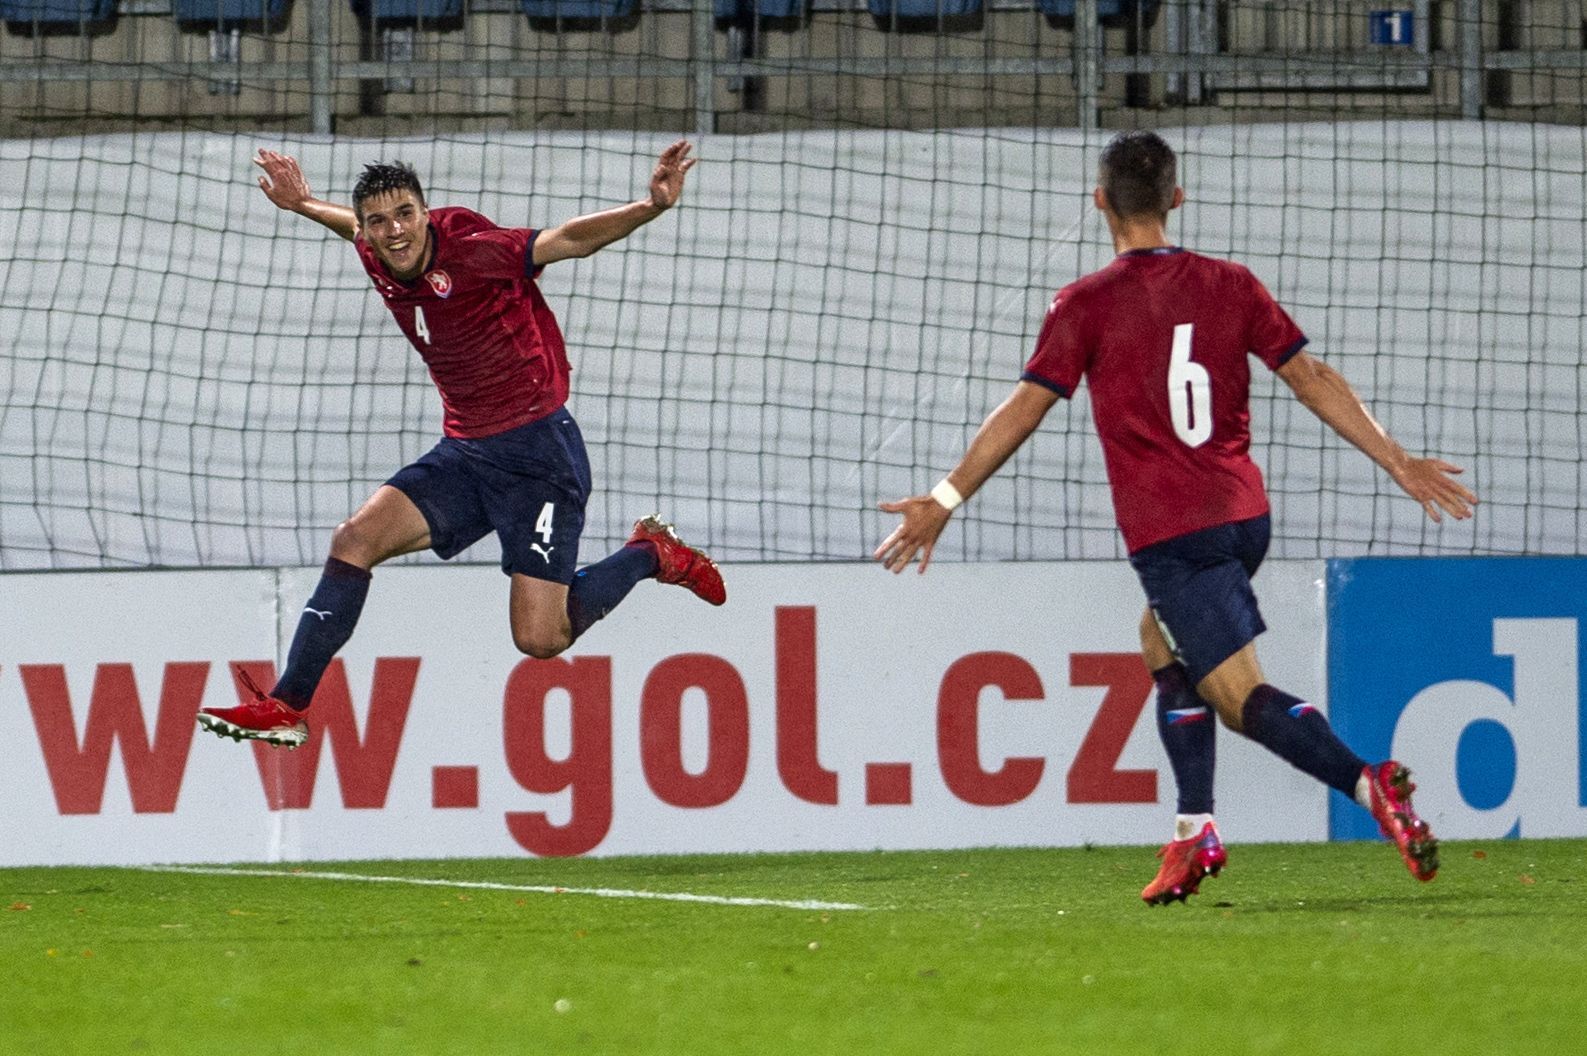 Kvalifikace ME 2023 do 21 let, Česko - Kosovo: Adam Gabriel a Michal Fukala slaví gól na 2:0